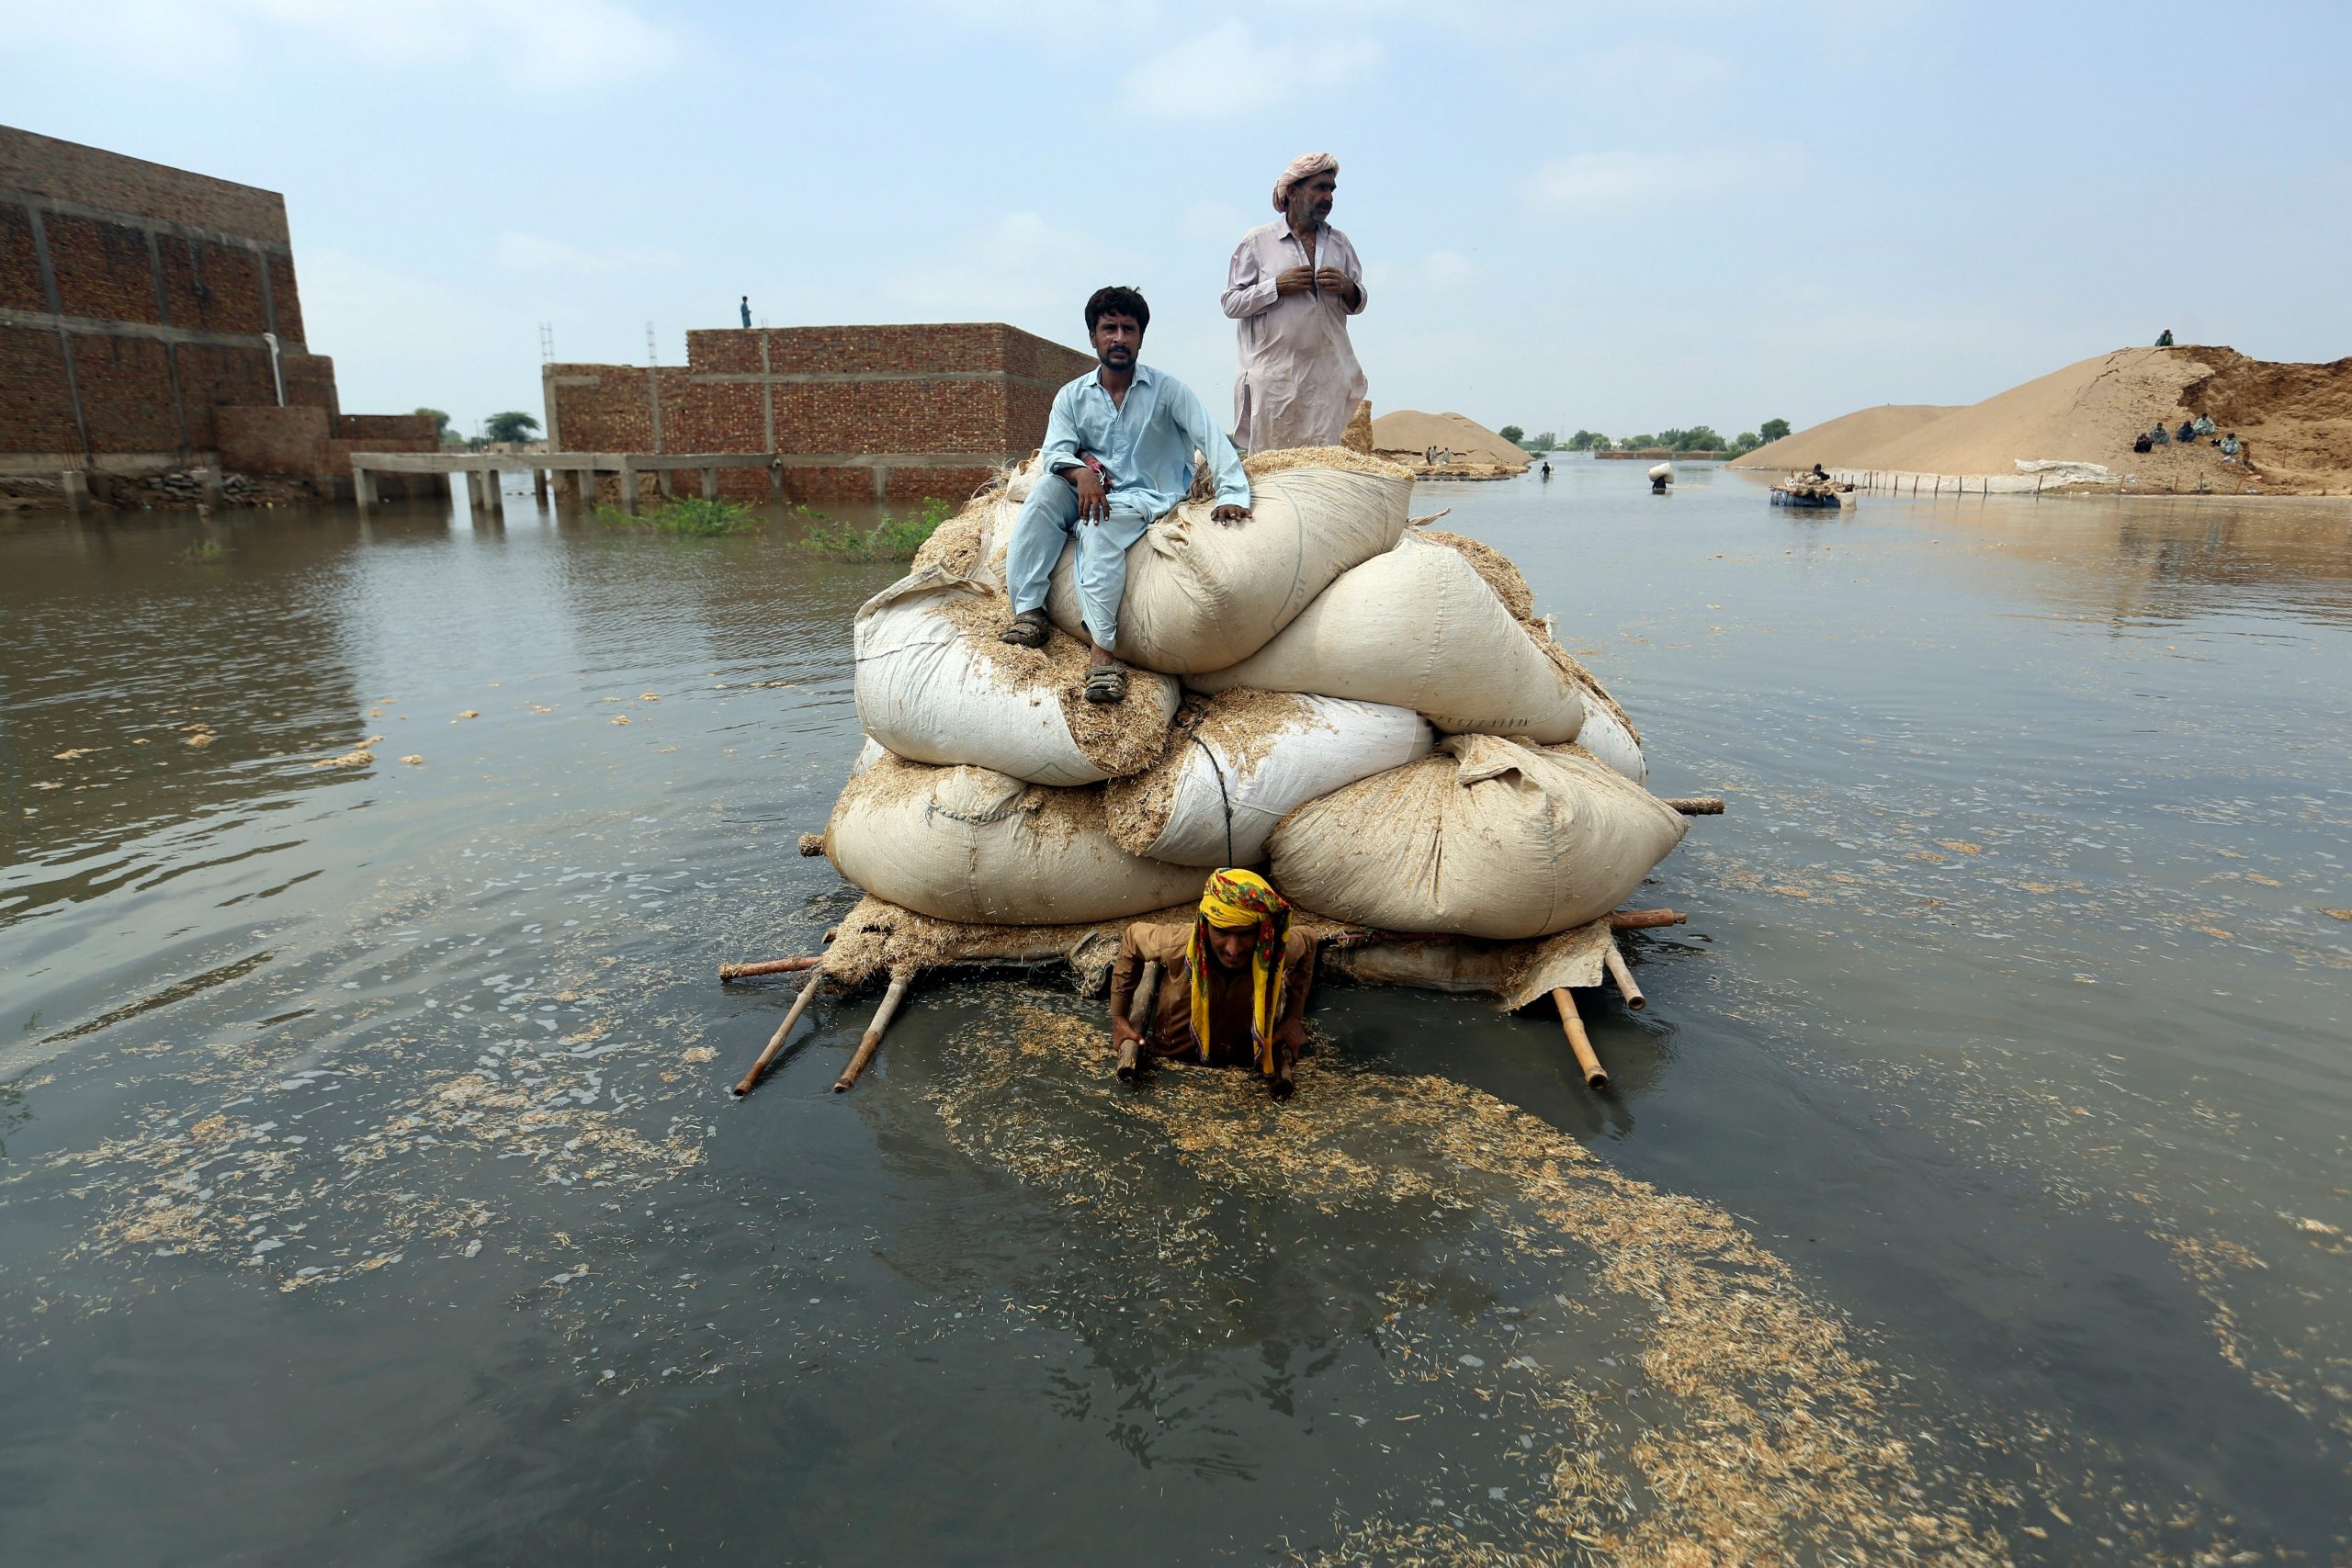 pakistan flood